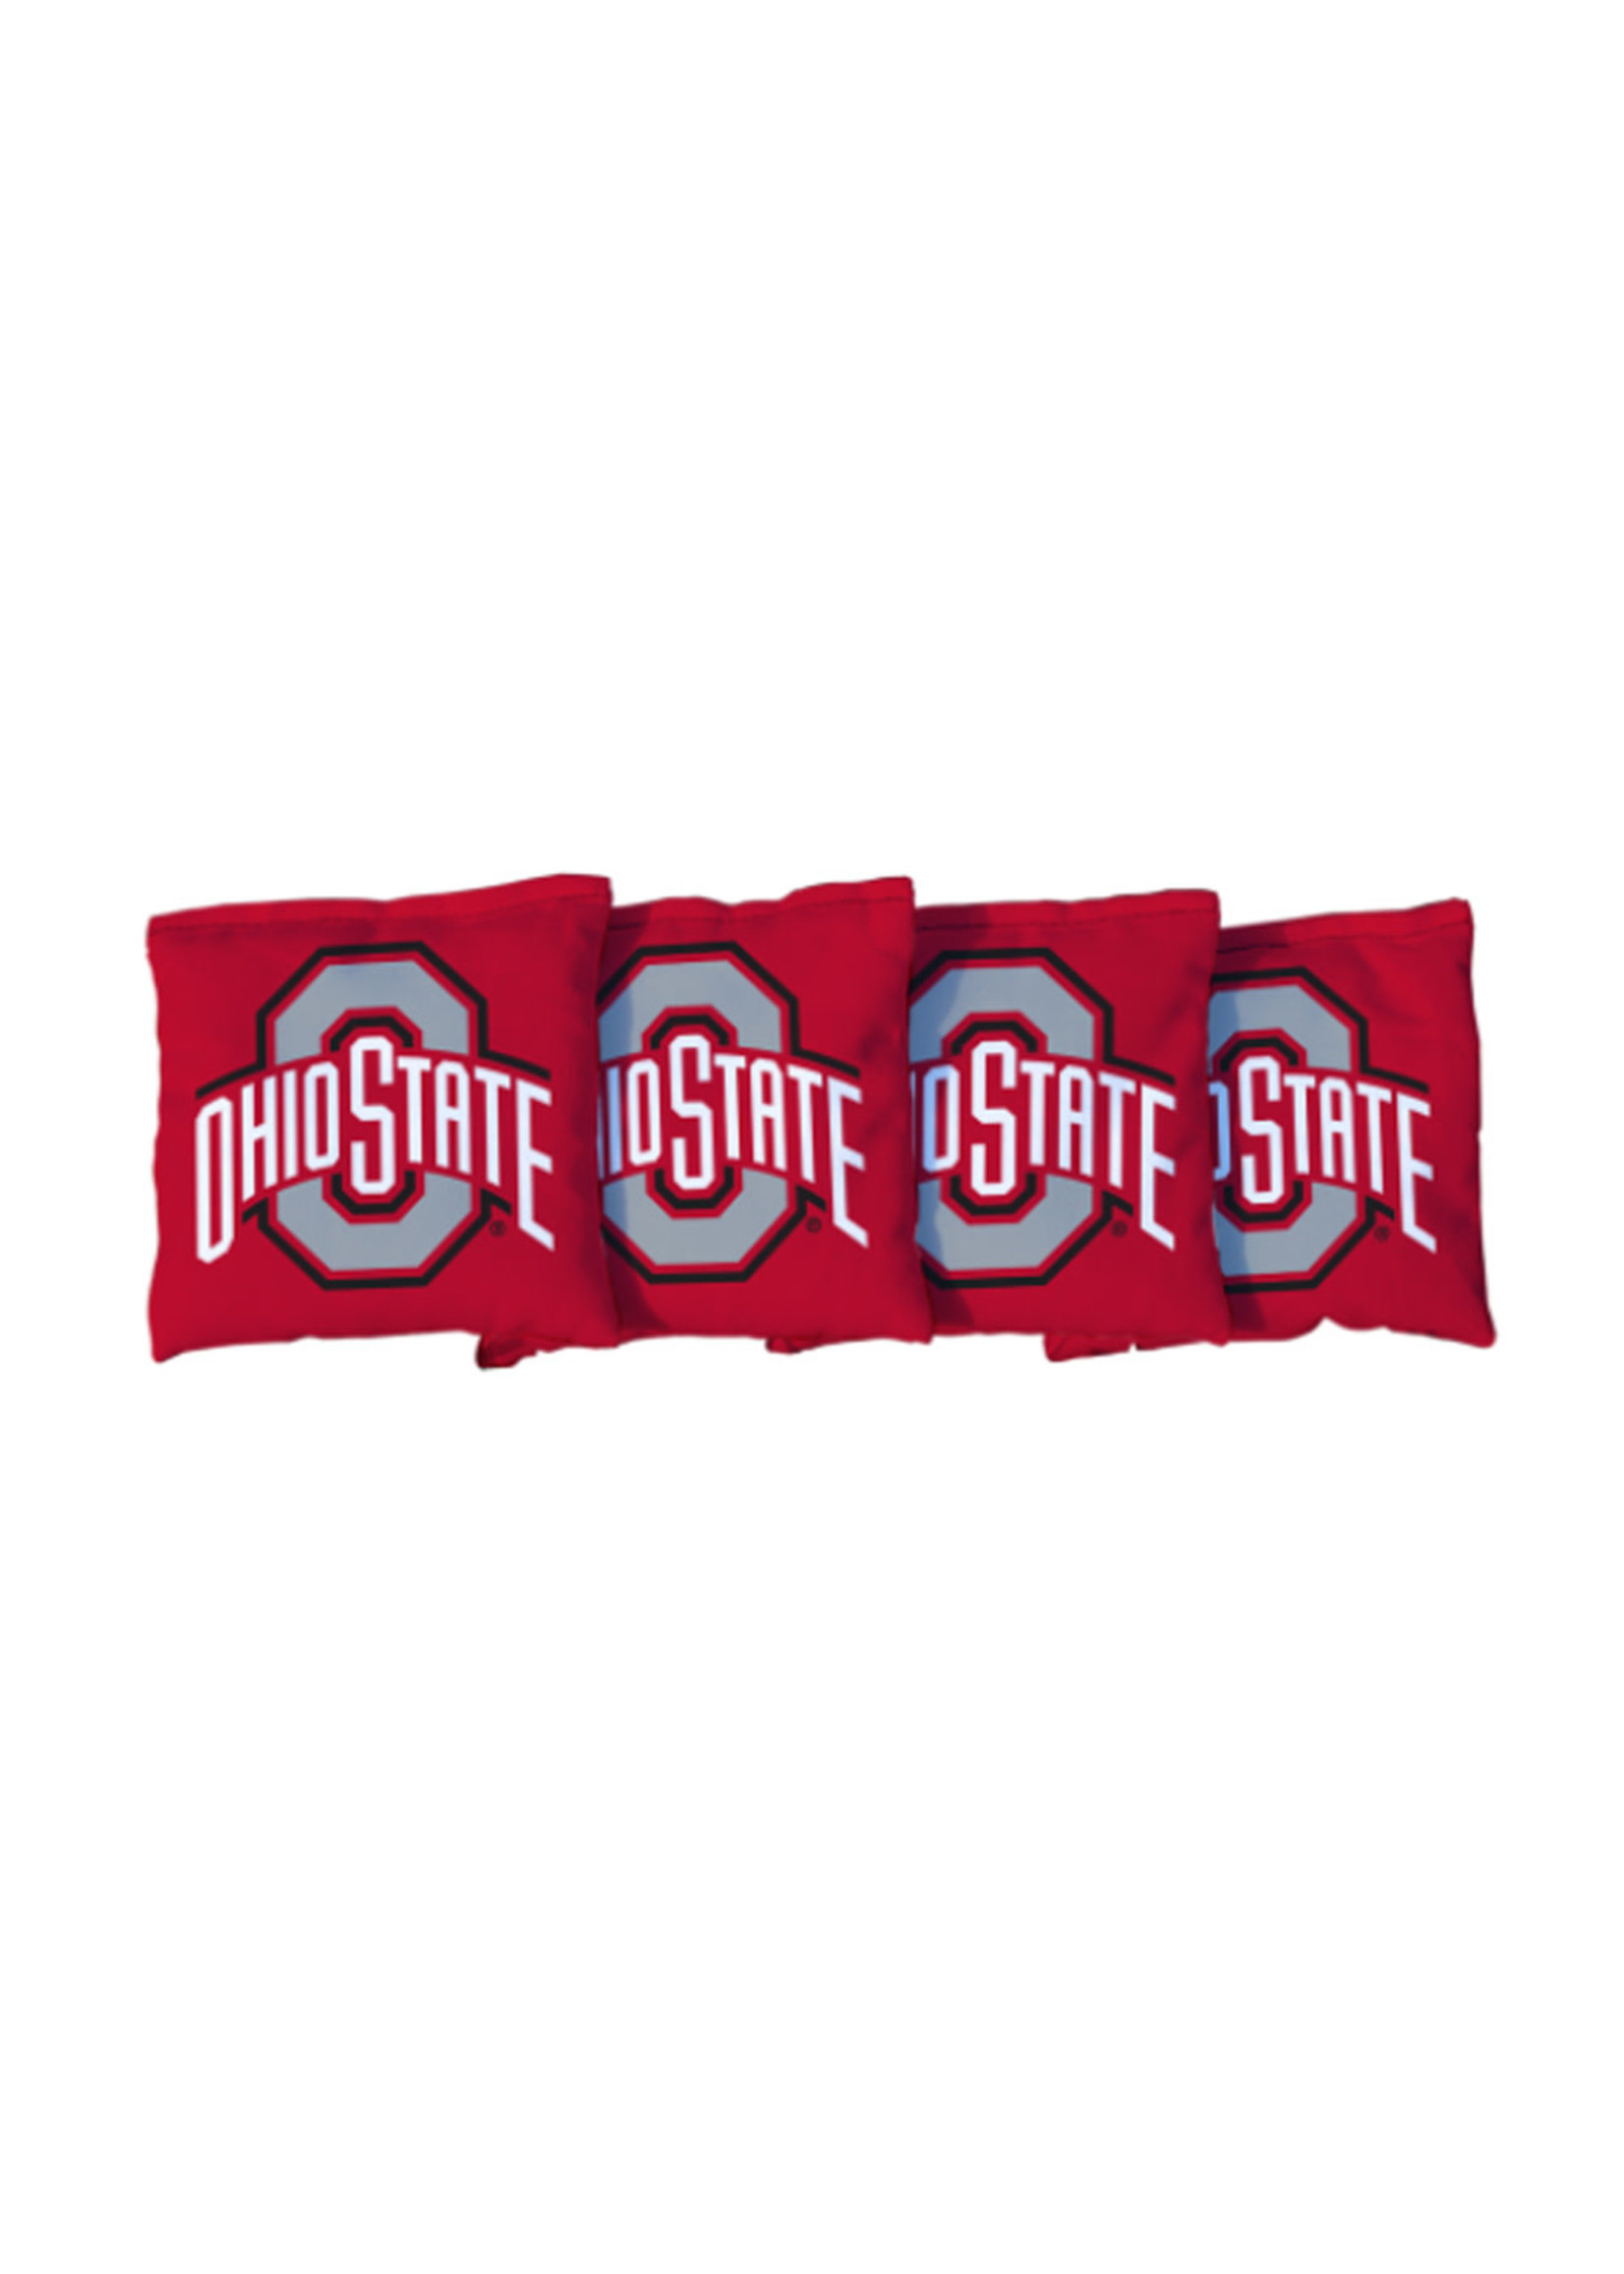 Ohio State Buckeyes Red Regulation Bags - 4ct